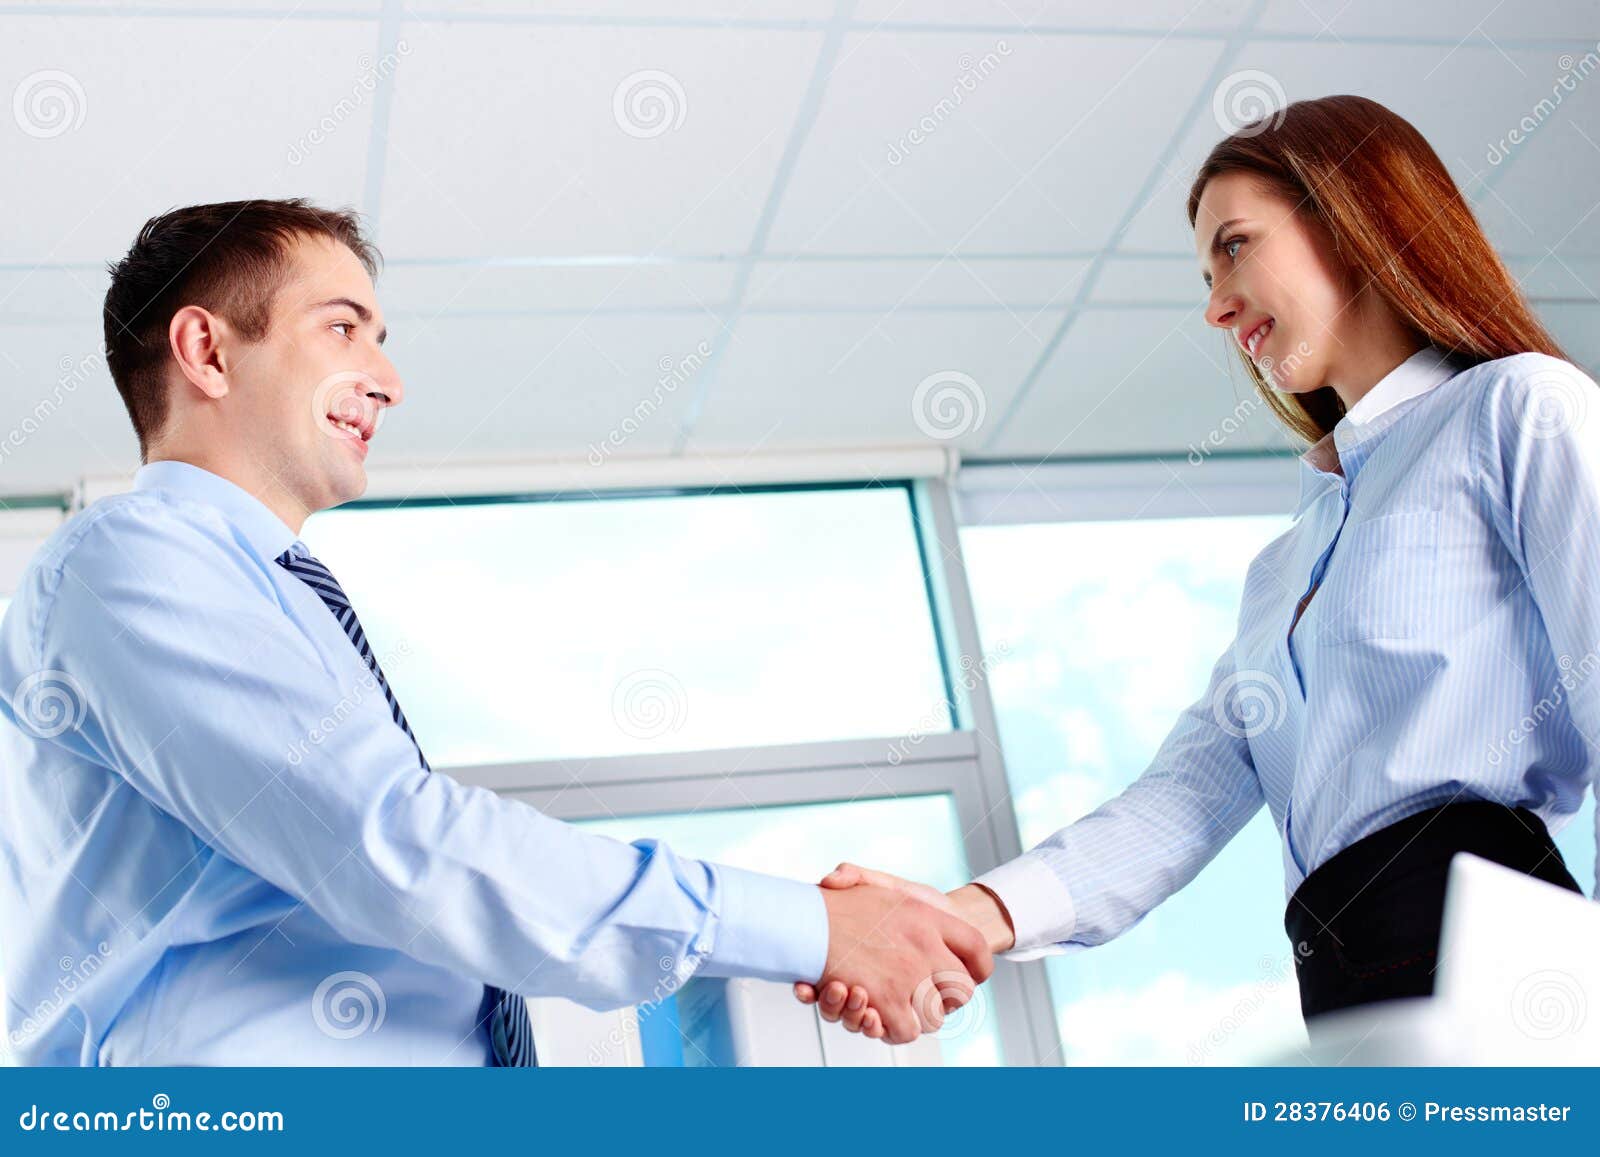 Business deal. 在醒目的交易以后的业务伙伴握手照片